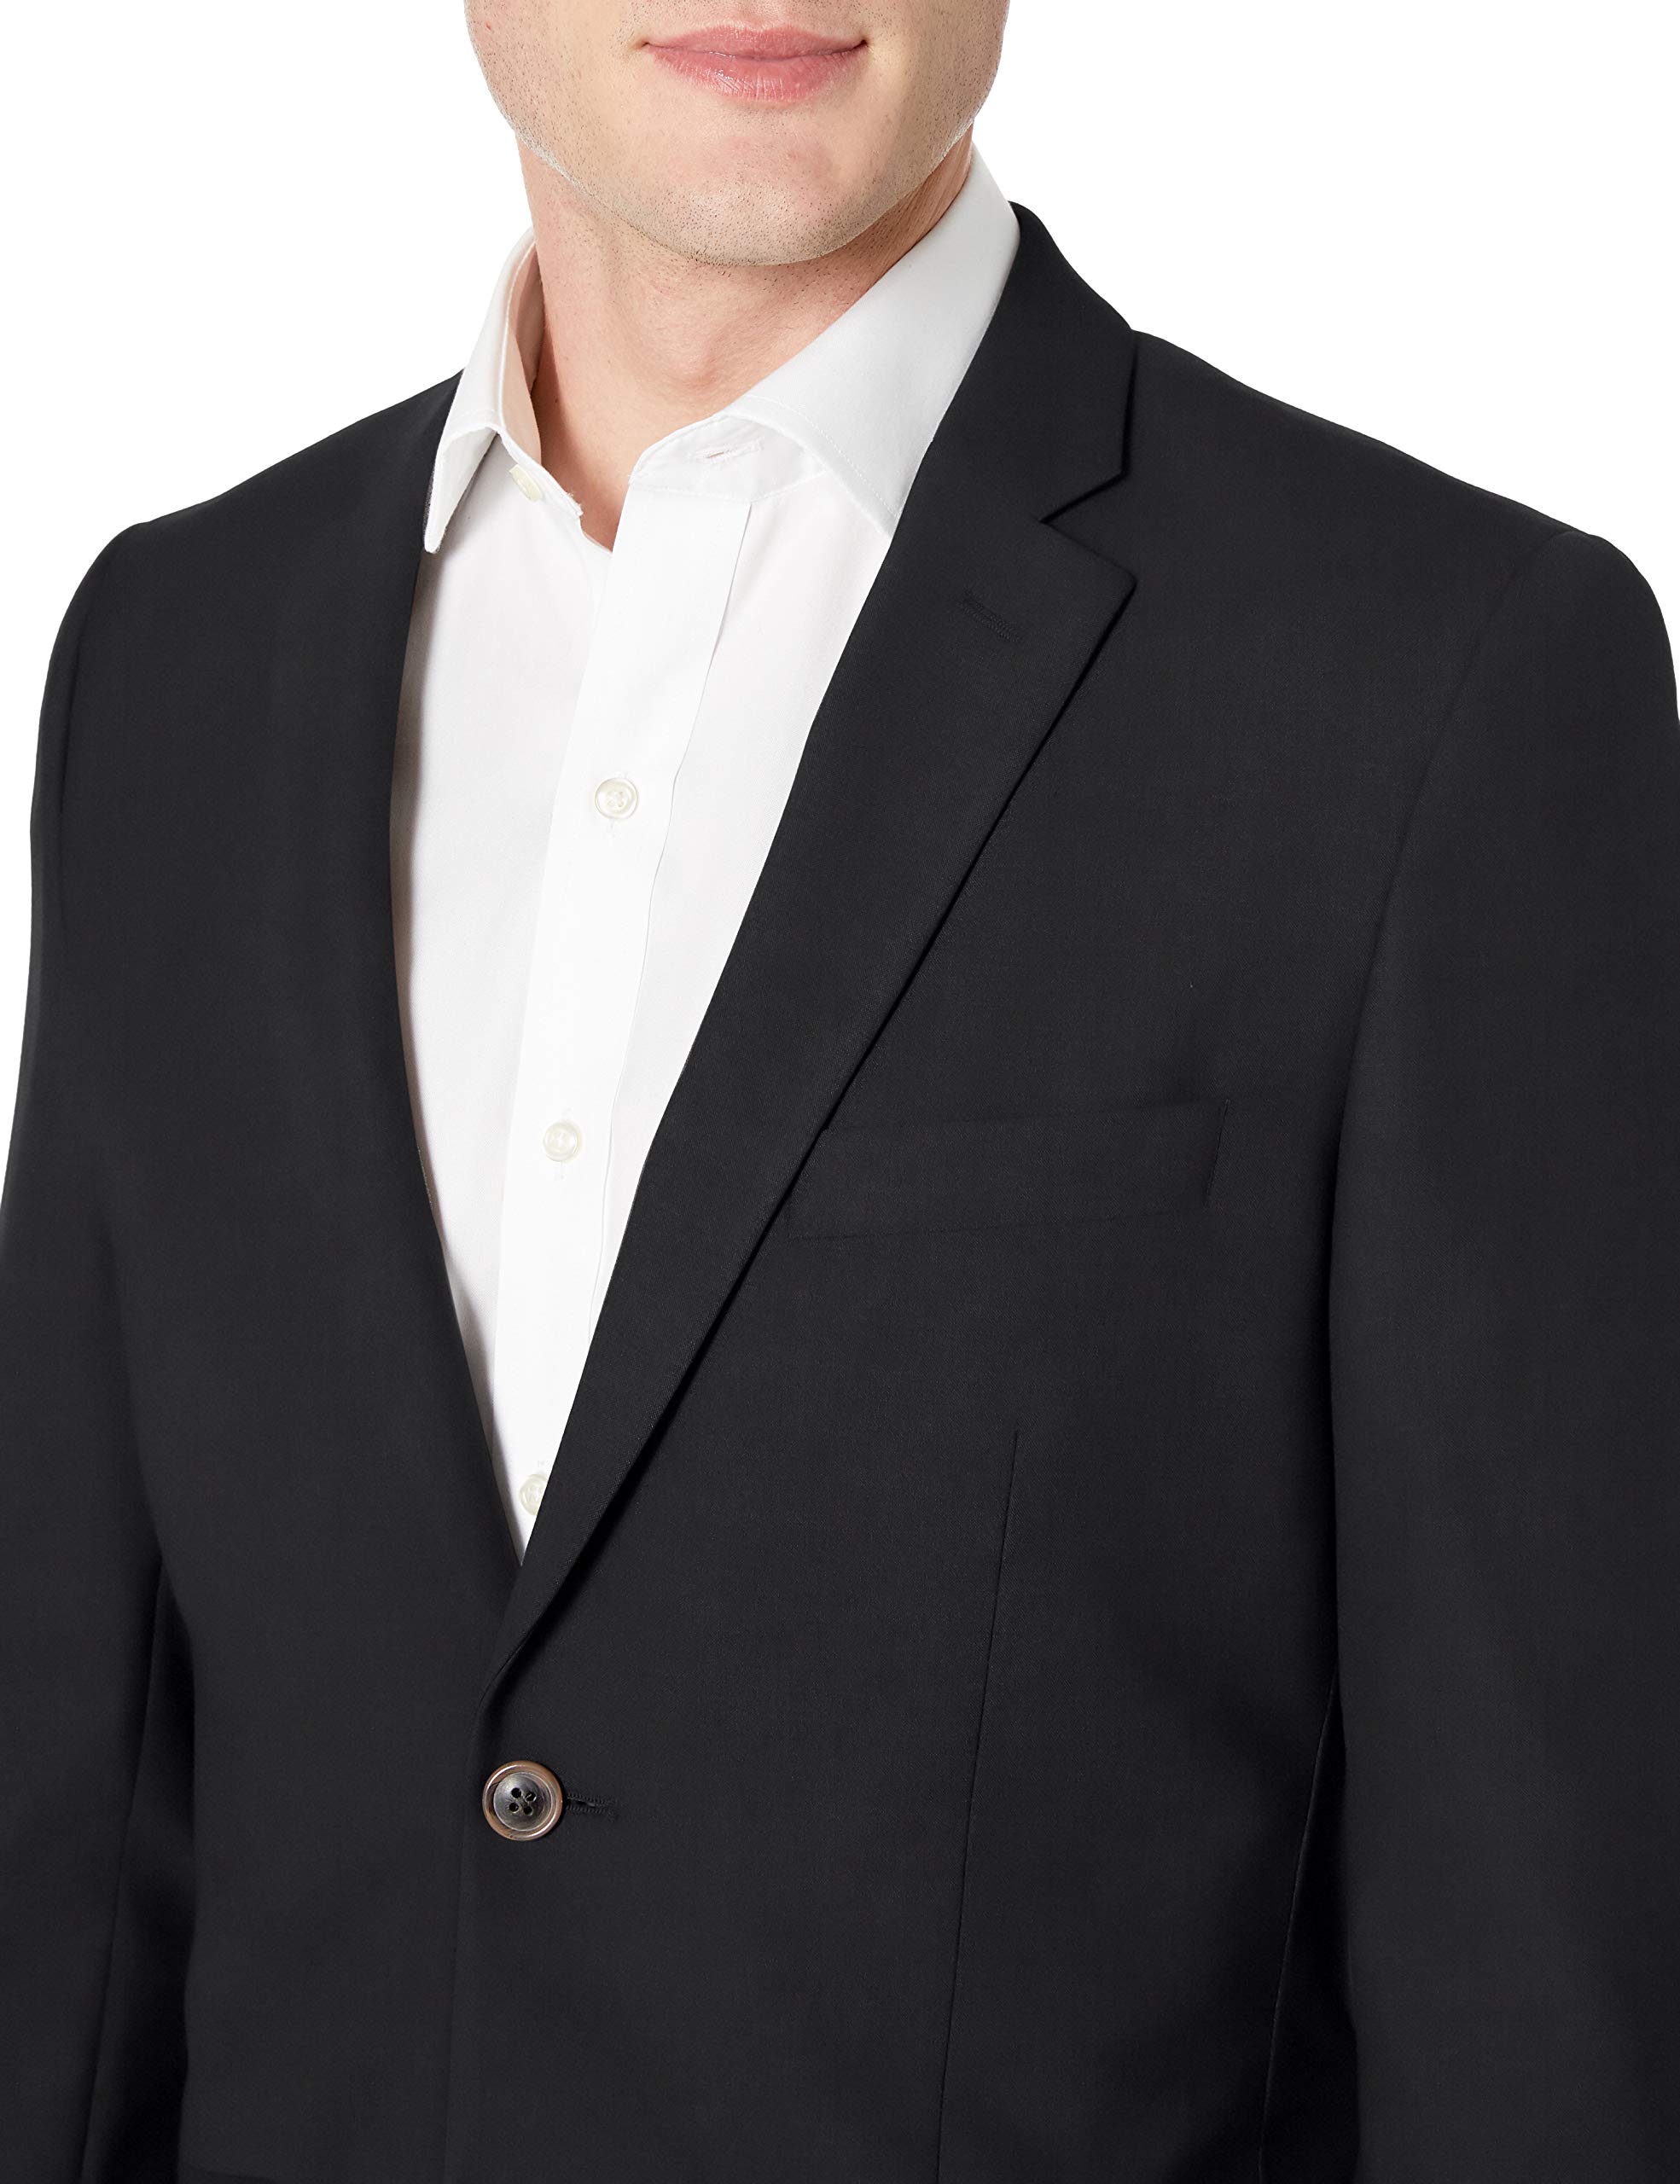 Amazon Essentials Men's Long-Sleeve Button-Front Slim-Fit Stretch Blazer